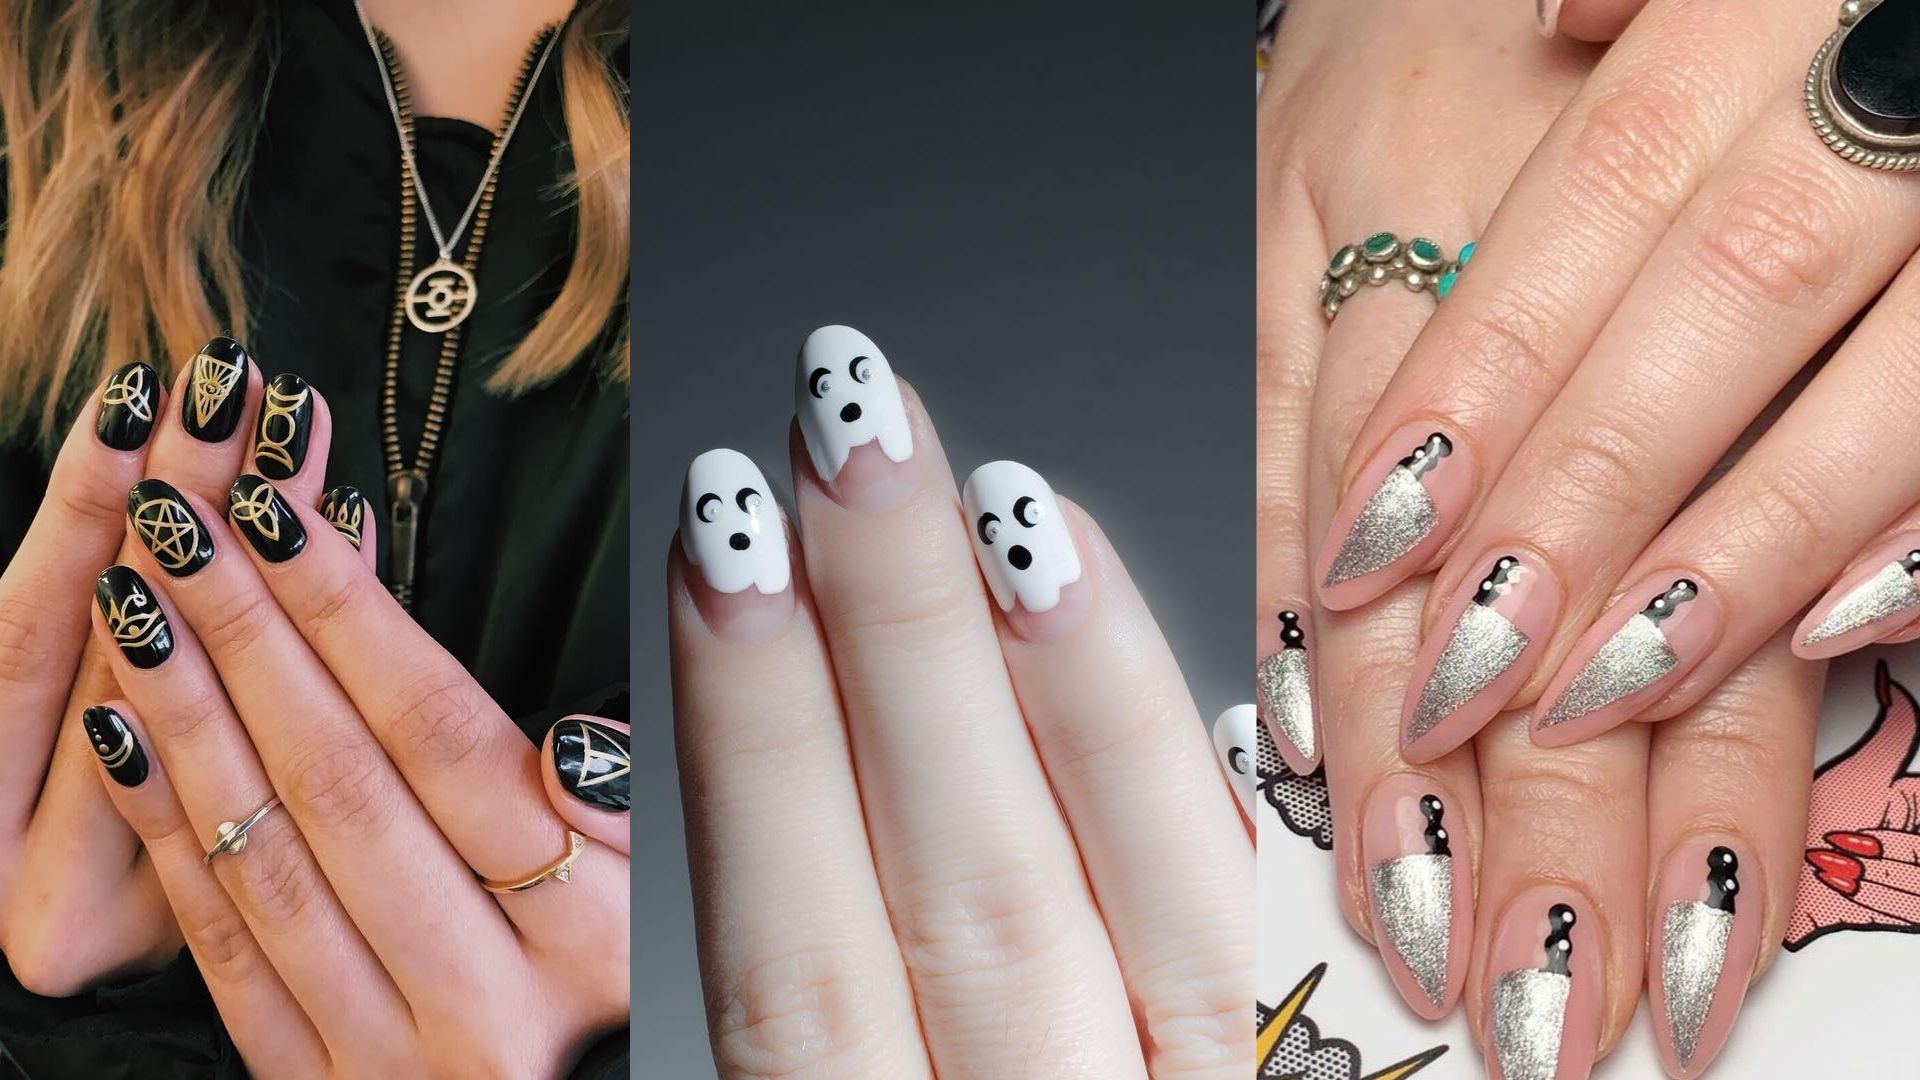 1. "Halloween-inspired nail art ideas" - wide 2